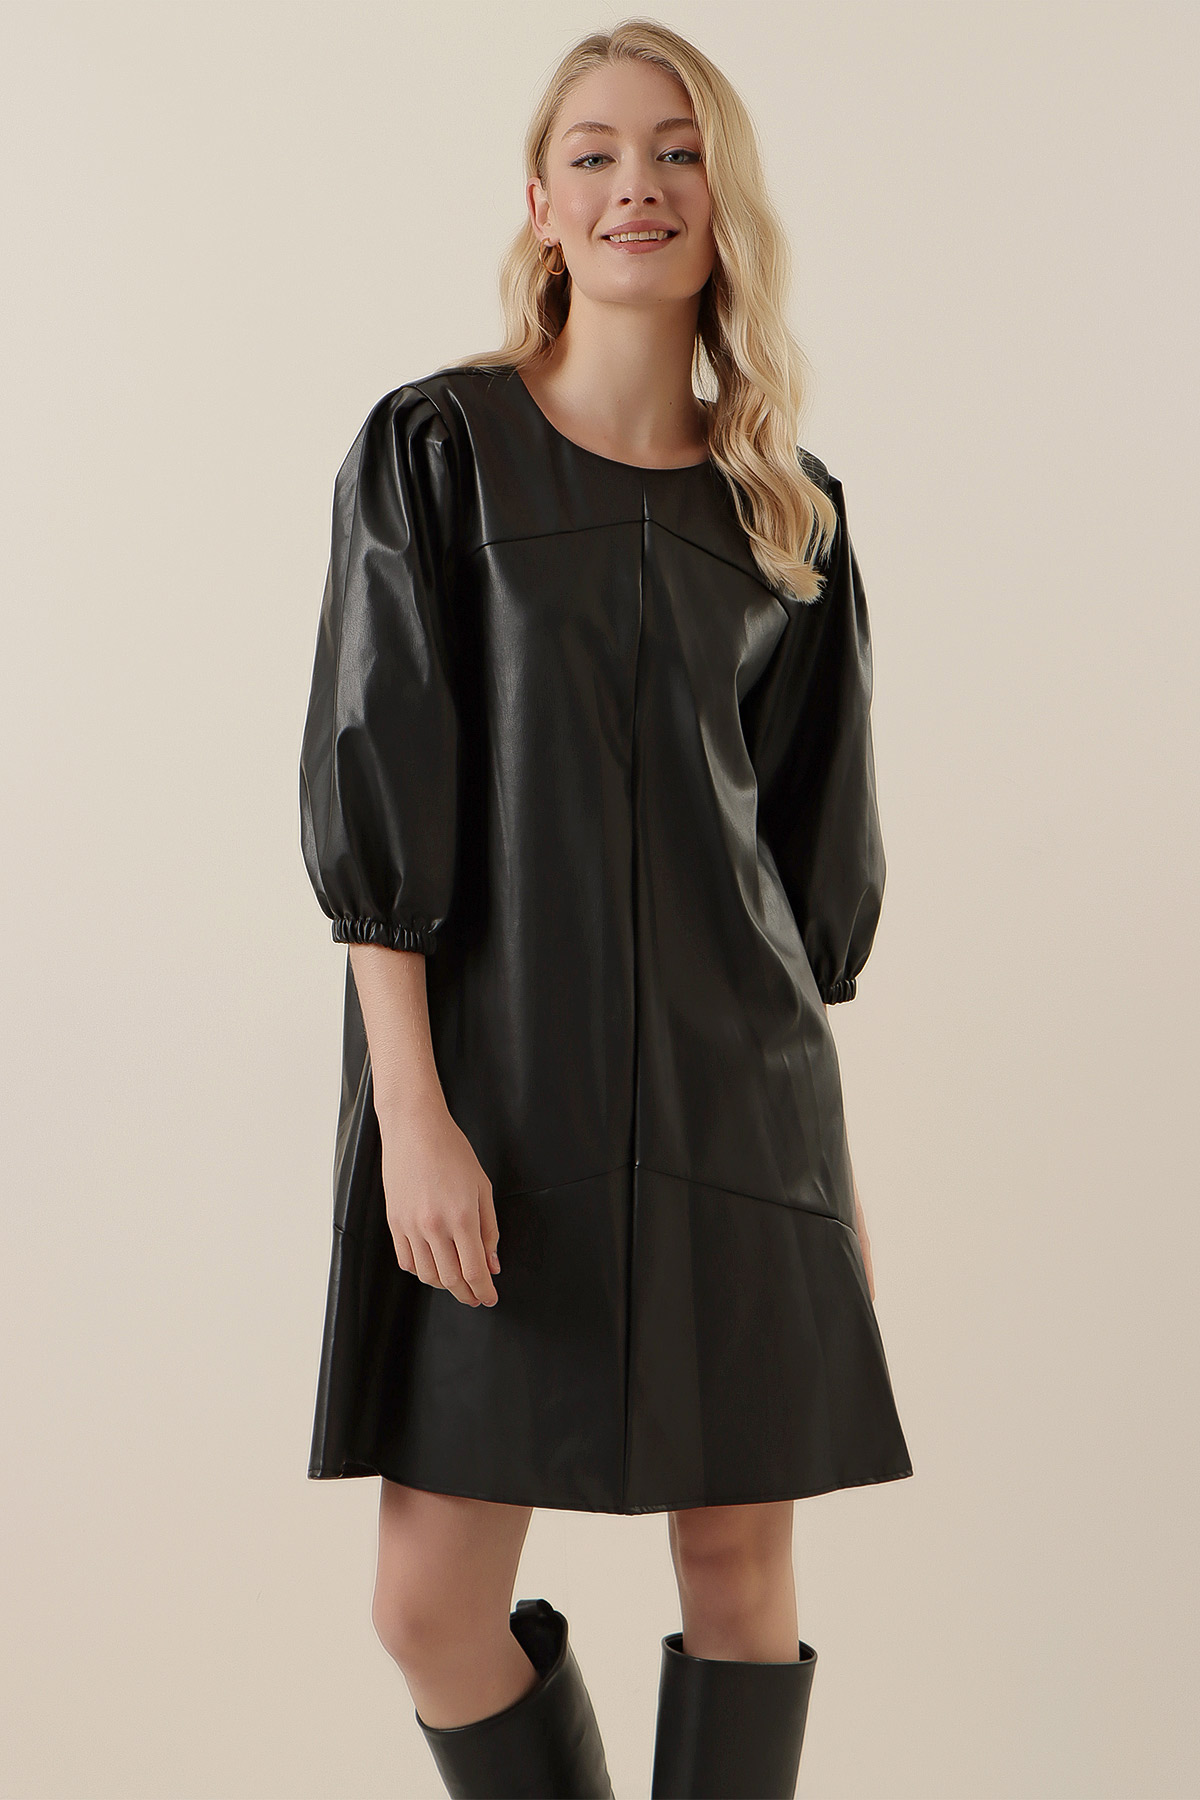 A model wears 46482 - Dress - Black, wholesale Dress of Bigdart to display at Lonca